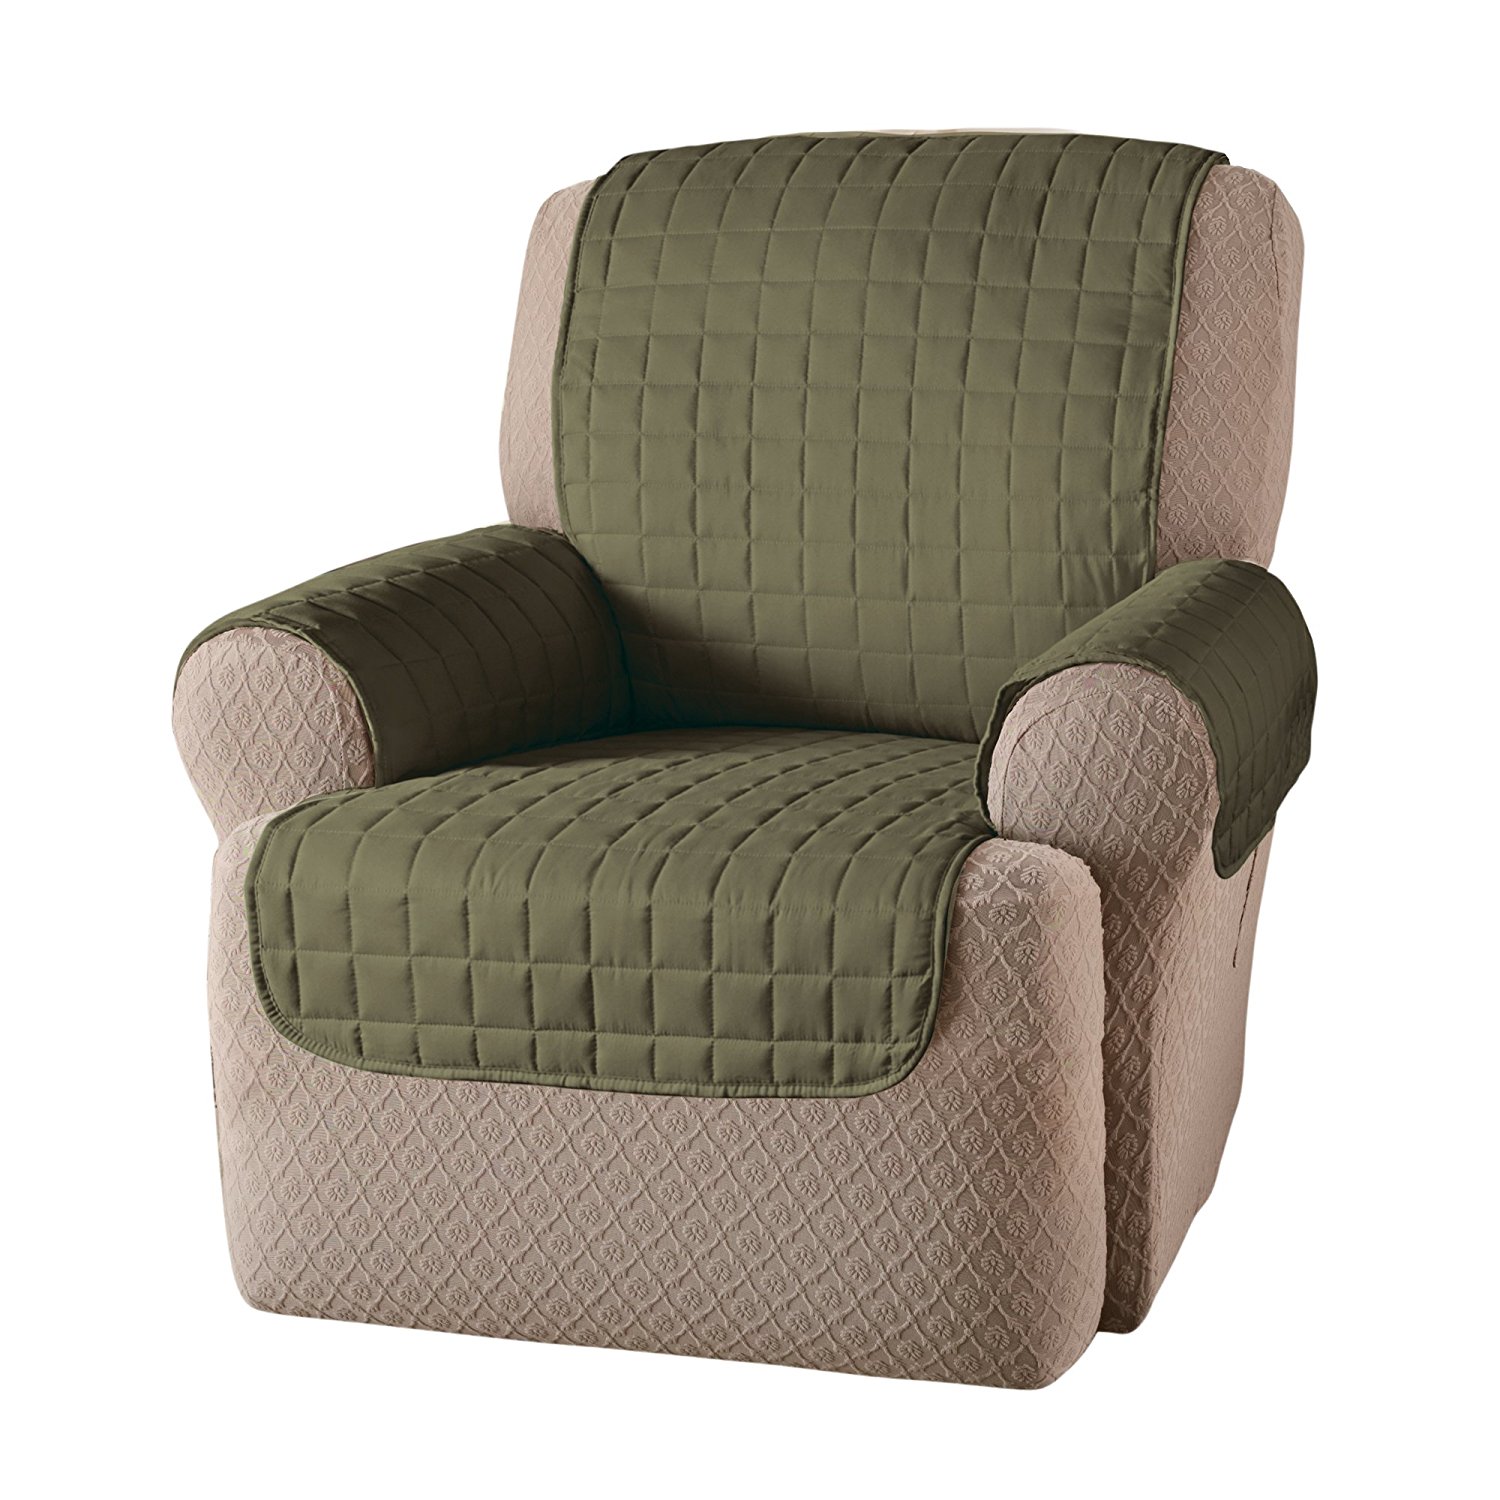 walmart chair covers